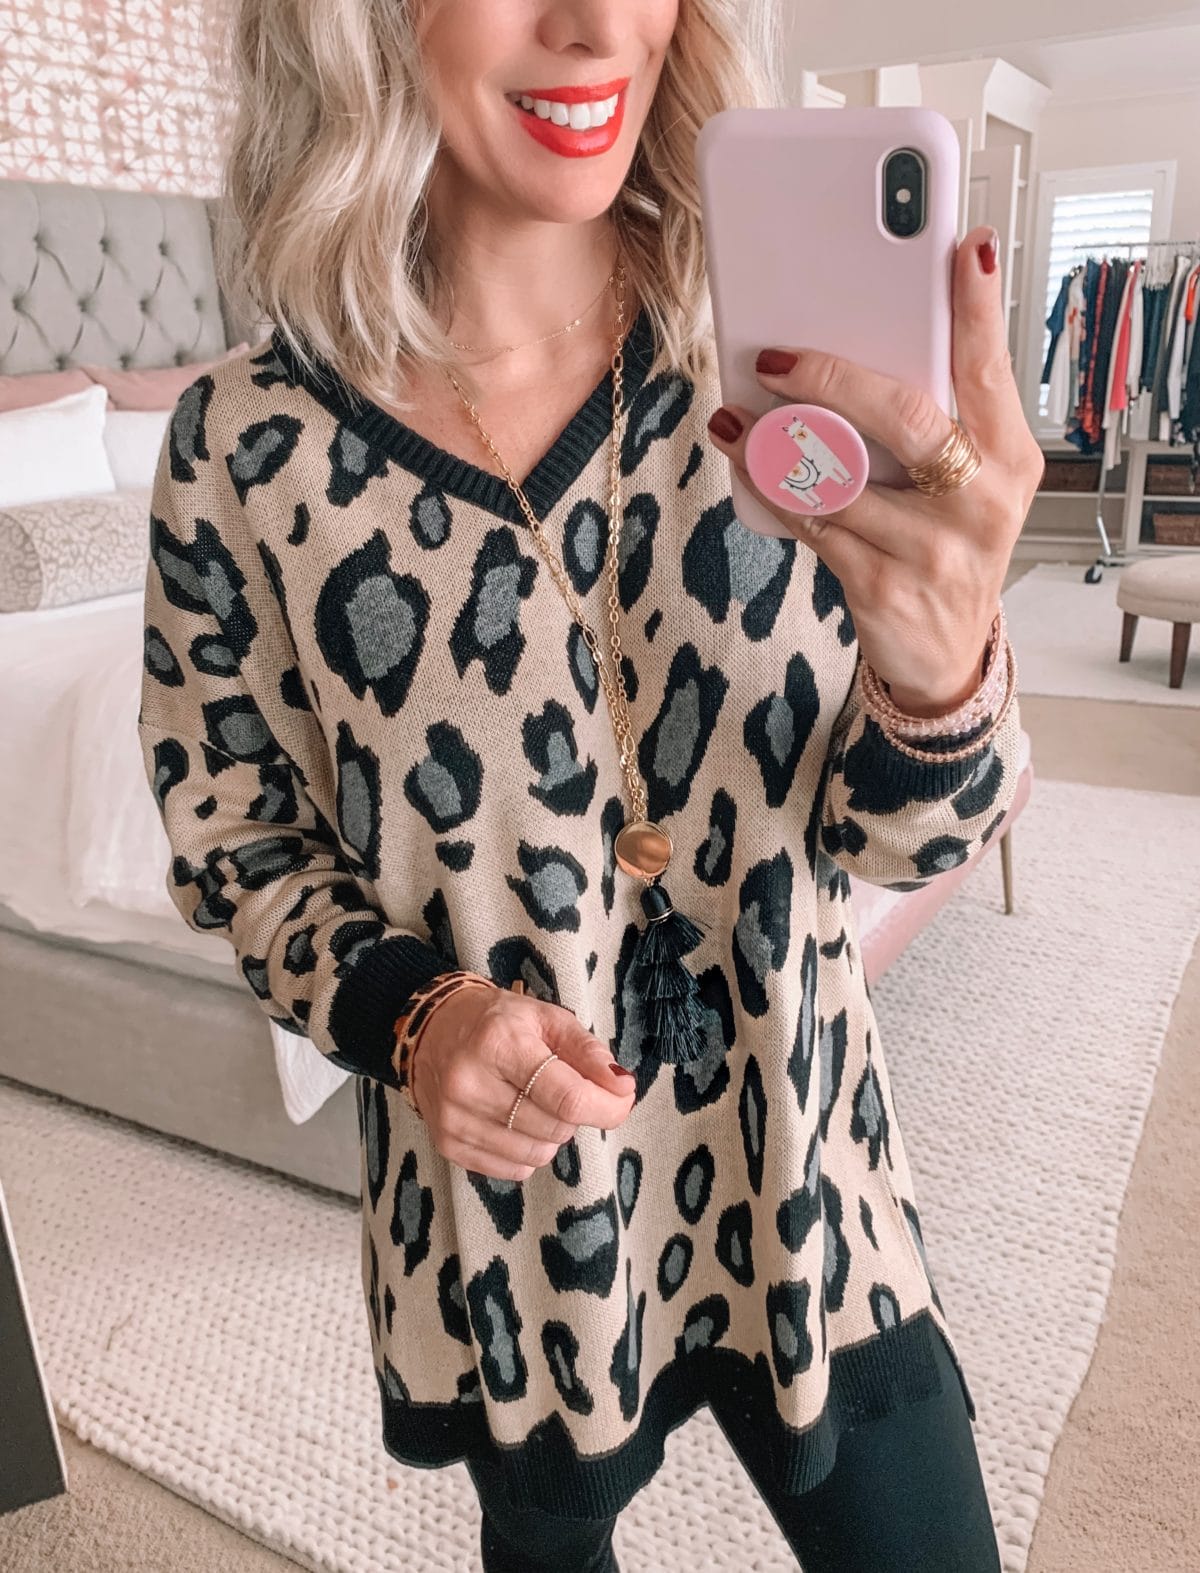 Amazon Prime Fashion- Leopard Sweater With Leggings 